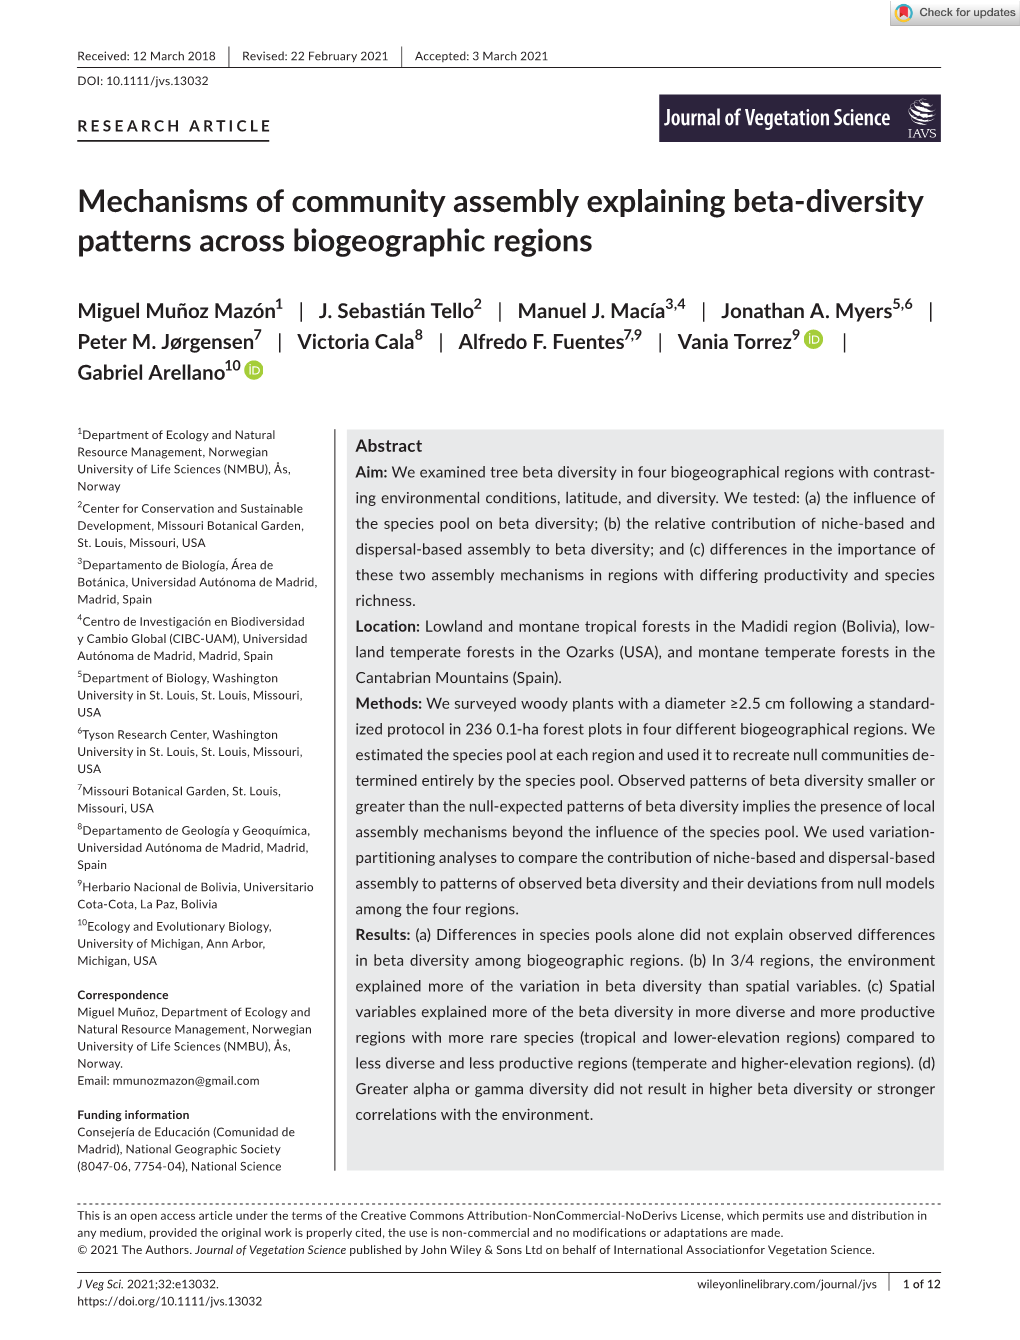 Mechanisms of Community Assembly Explaining Beta‐Diversity Patterns